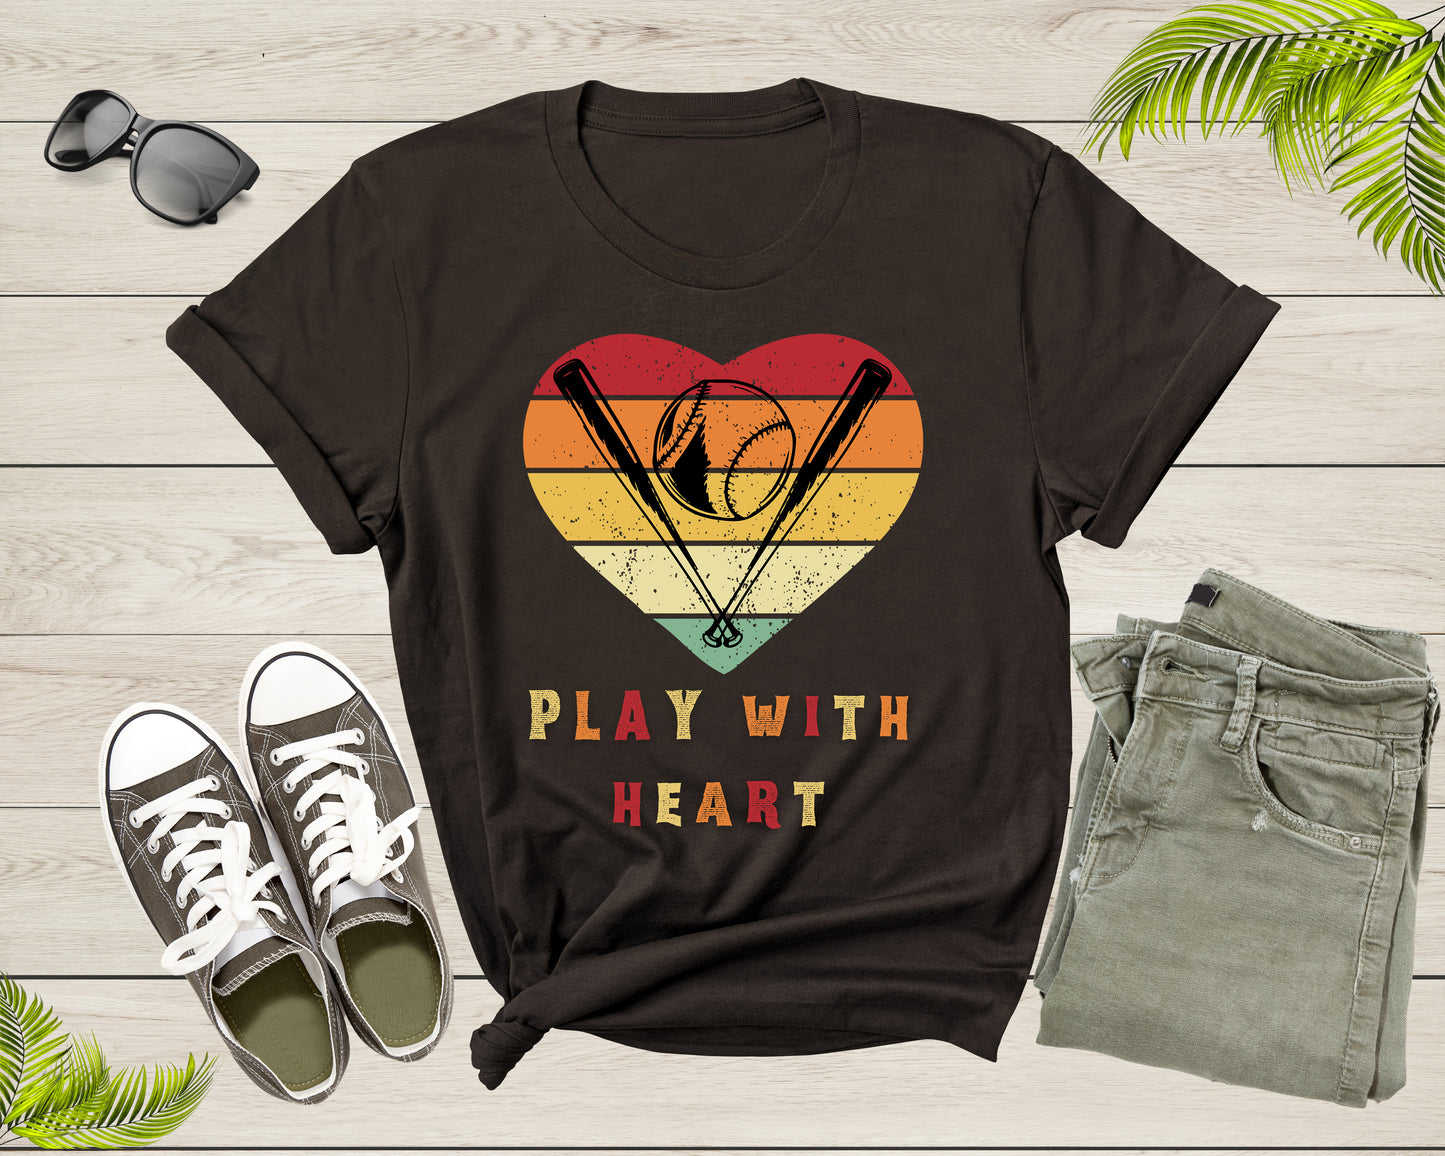 Baseball Lovers Gift Shirt For Adults Women Men Kids Baseball Player Birthday Present Gift Tshirt For Boys Girls Youth Mom Dad T-shirt